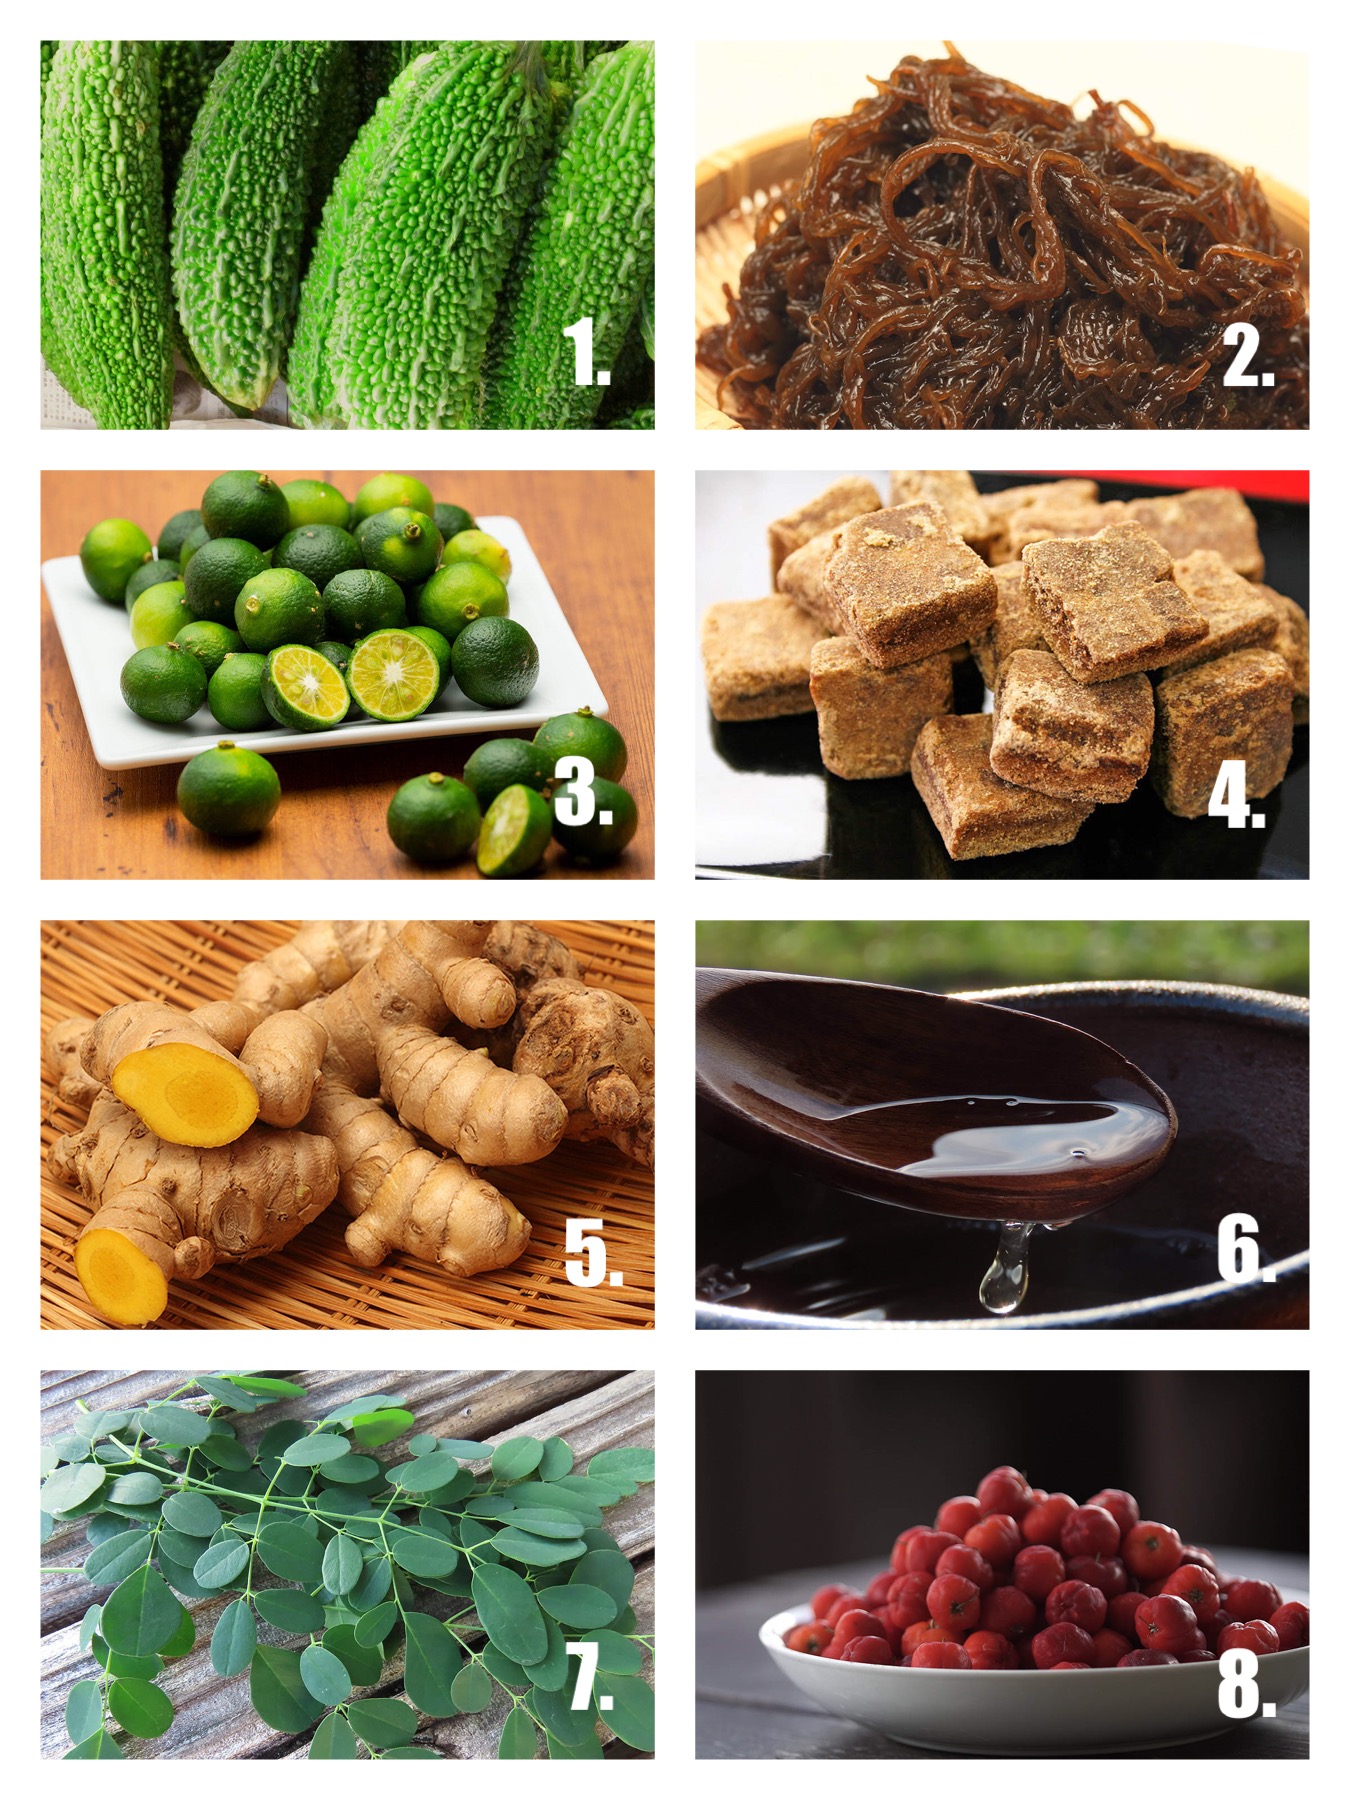 1. Goya 2. Mozuku seaweed 3. Shikuwasa 4. Sugarcane 5. Turmeric 6. Ryukyu moromi vinegar 7. Moringa 8. Acerola.